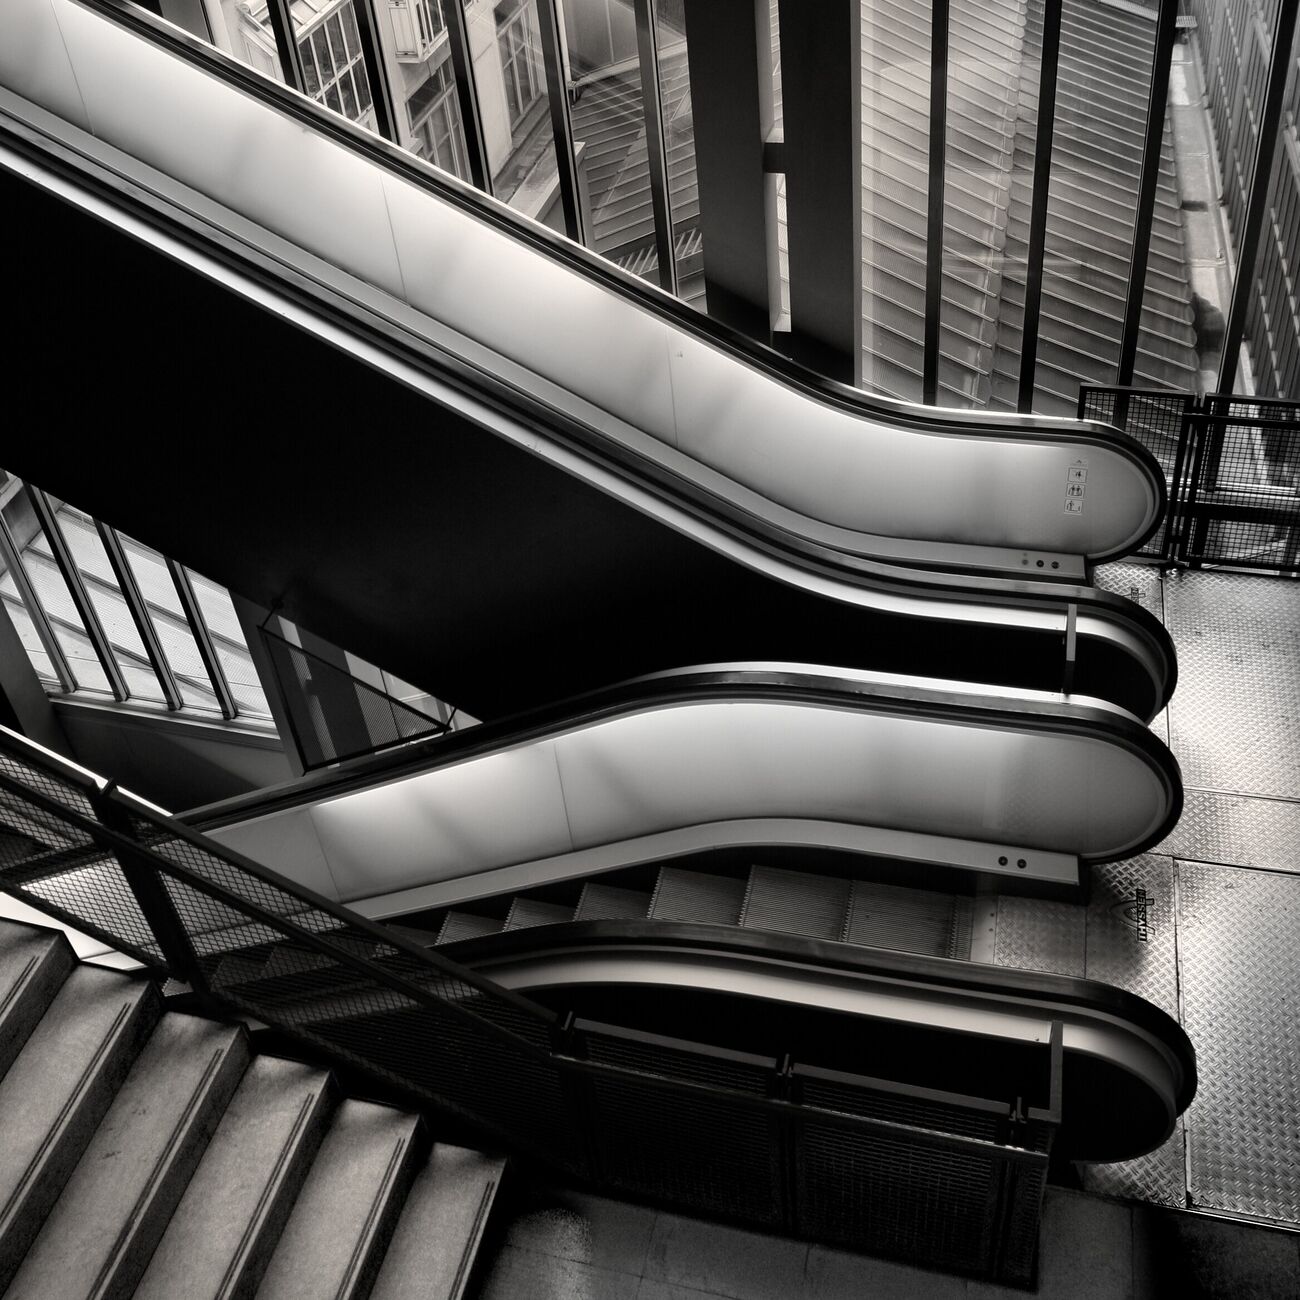 Achat d'une photographie 45 x 45 cm, Orsay museum escalator. Ref-564-4 - Denis Olivier Photographie